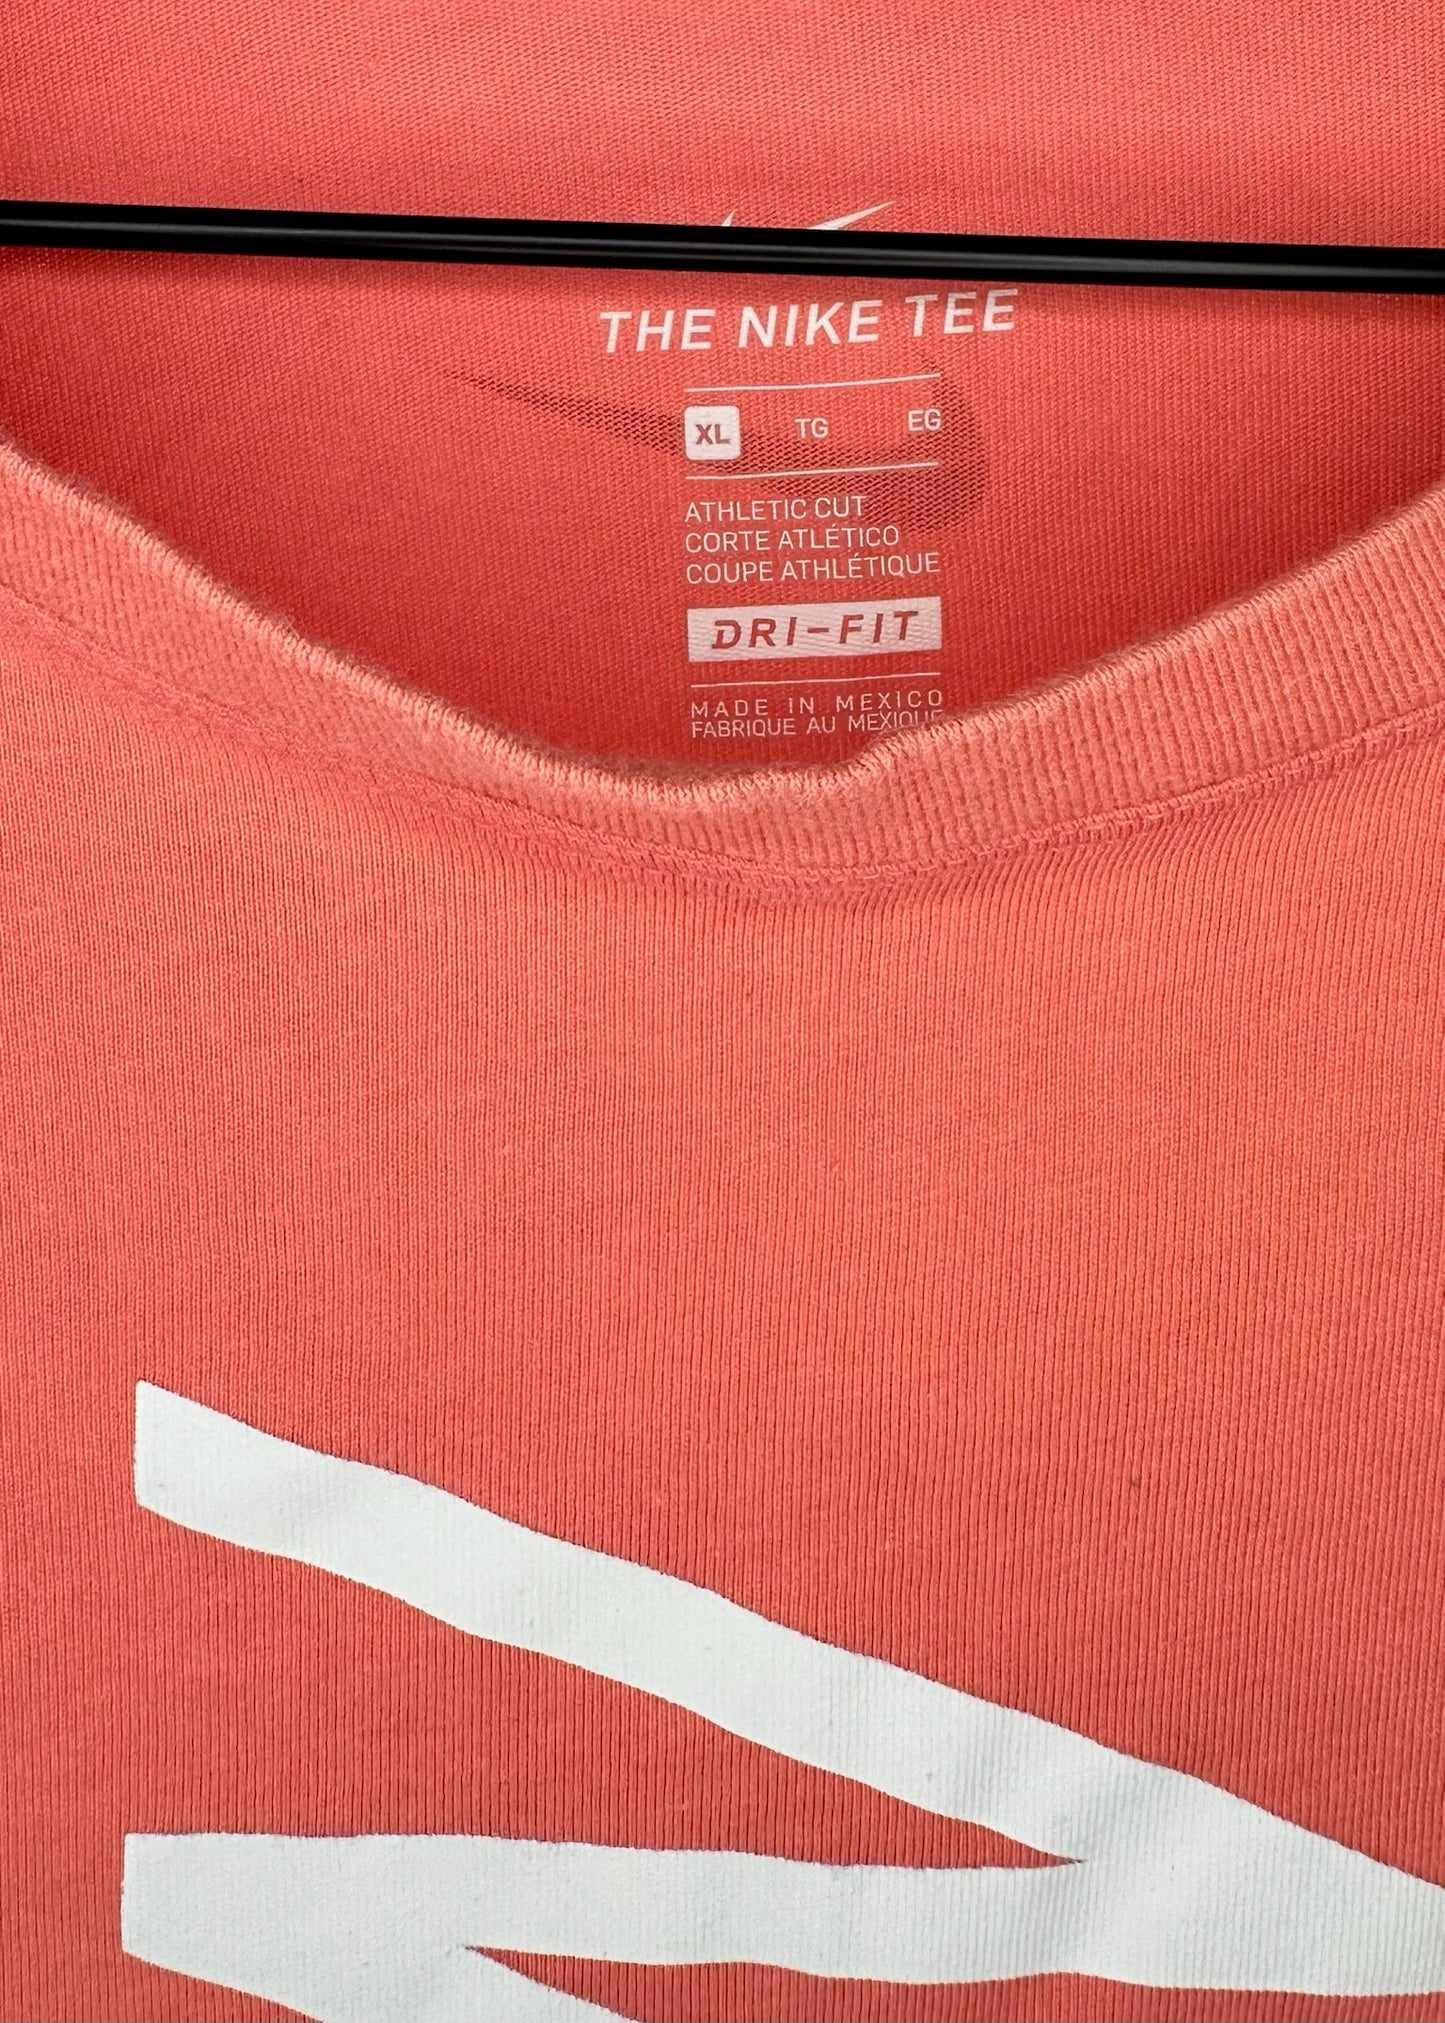 Pink Shirt by Nike